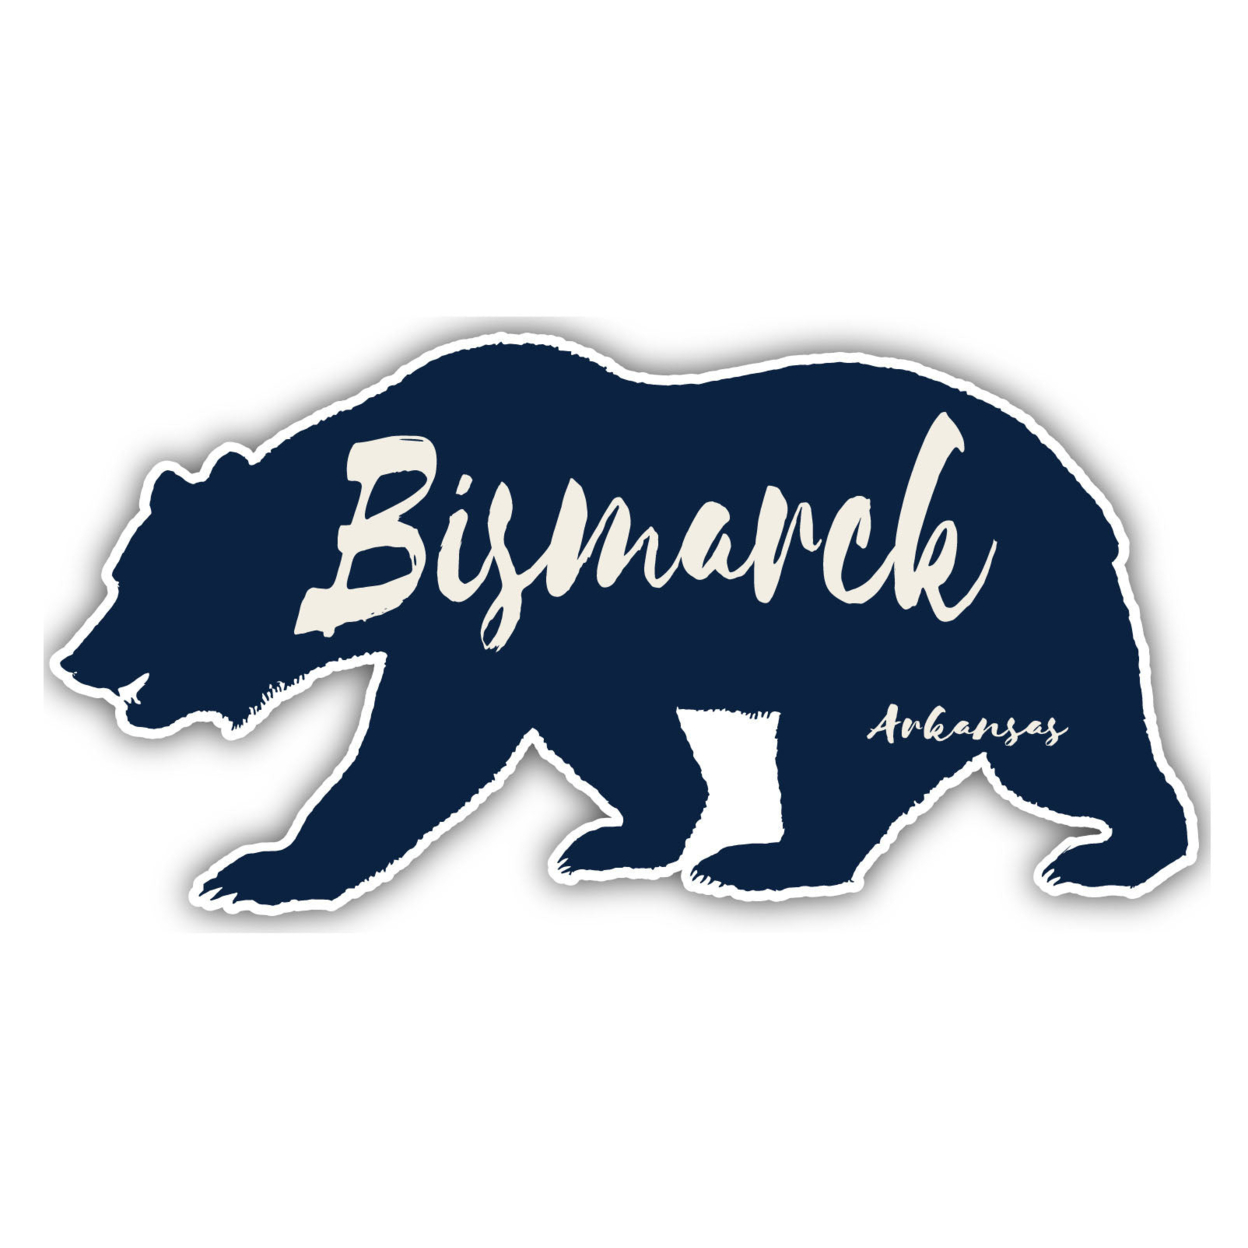 Bismarck Arkansas Souvenir Decorative Stickers (Choose Theme And Size) - 4-Pack, 2-Inch, Bear